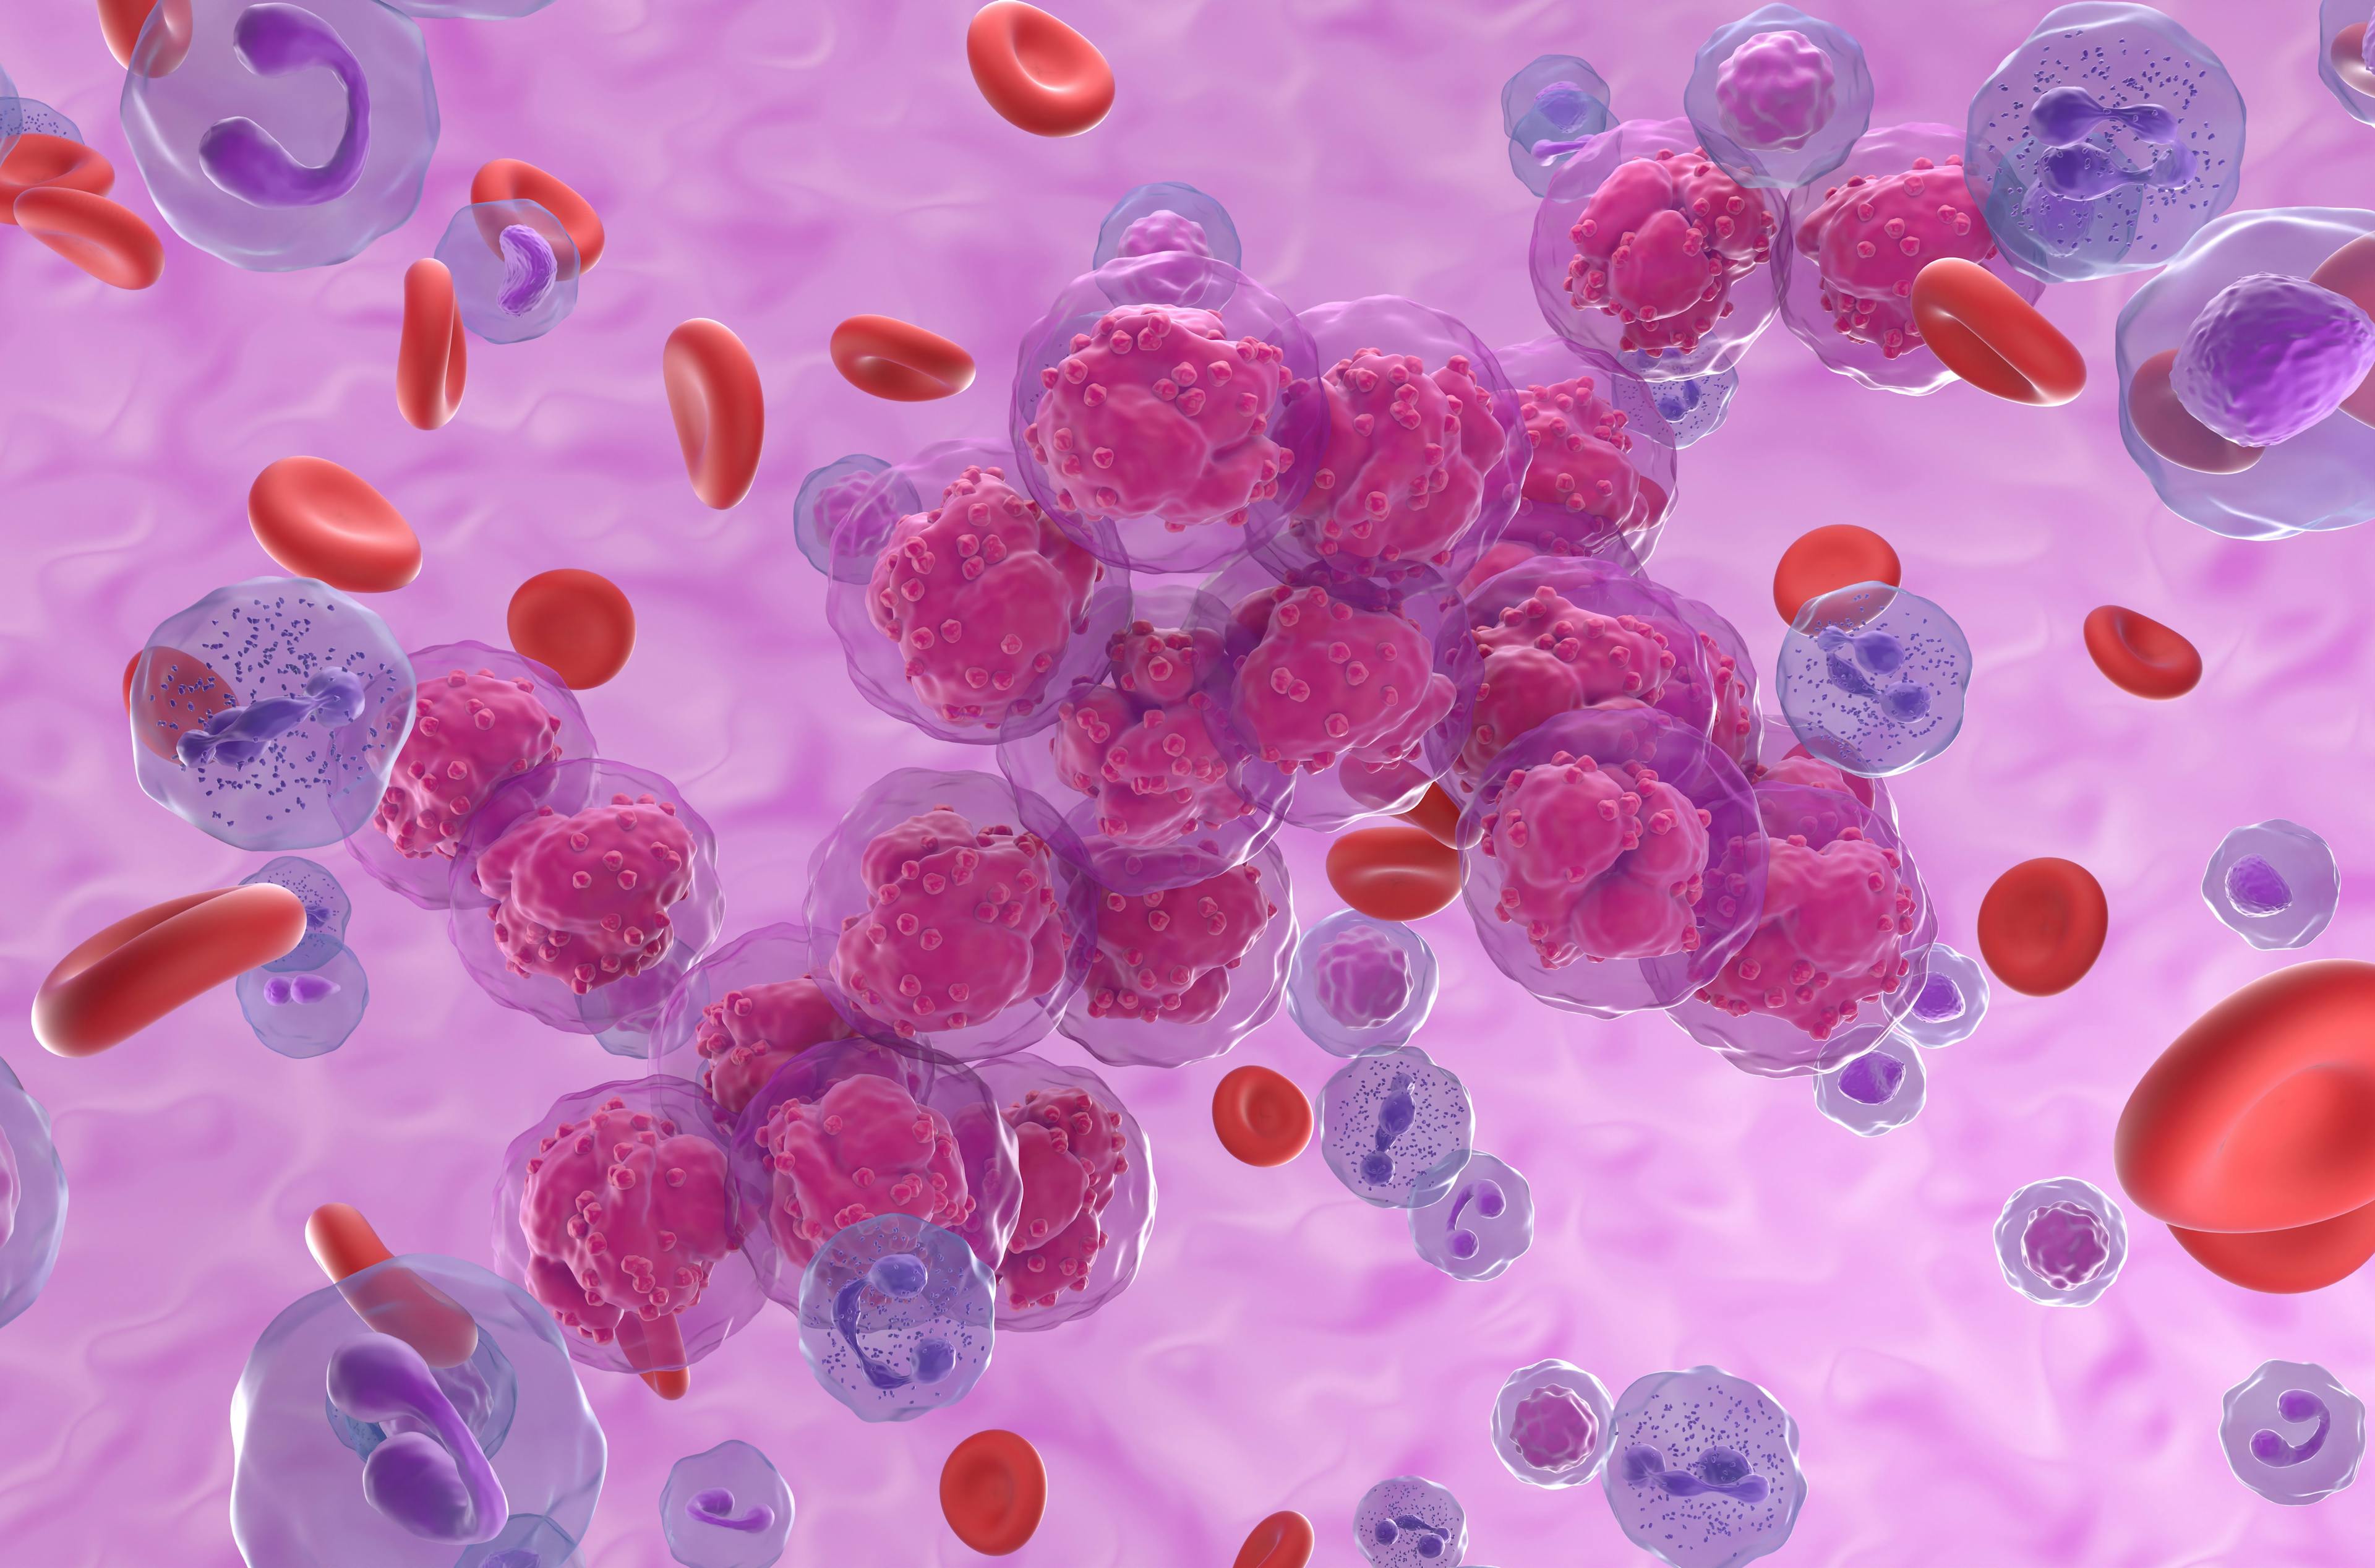 Acute lymphoblastic leukemia cancer cell clusters | Image credit: LASZLO - stock.adobe.com